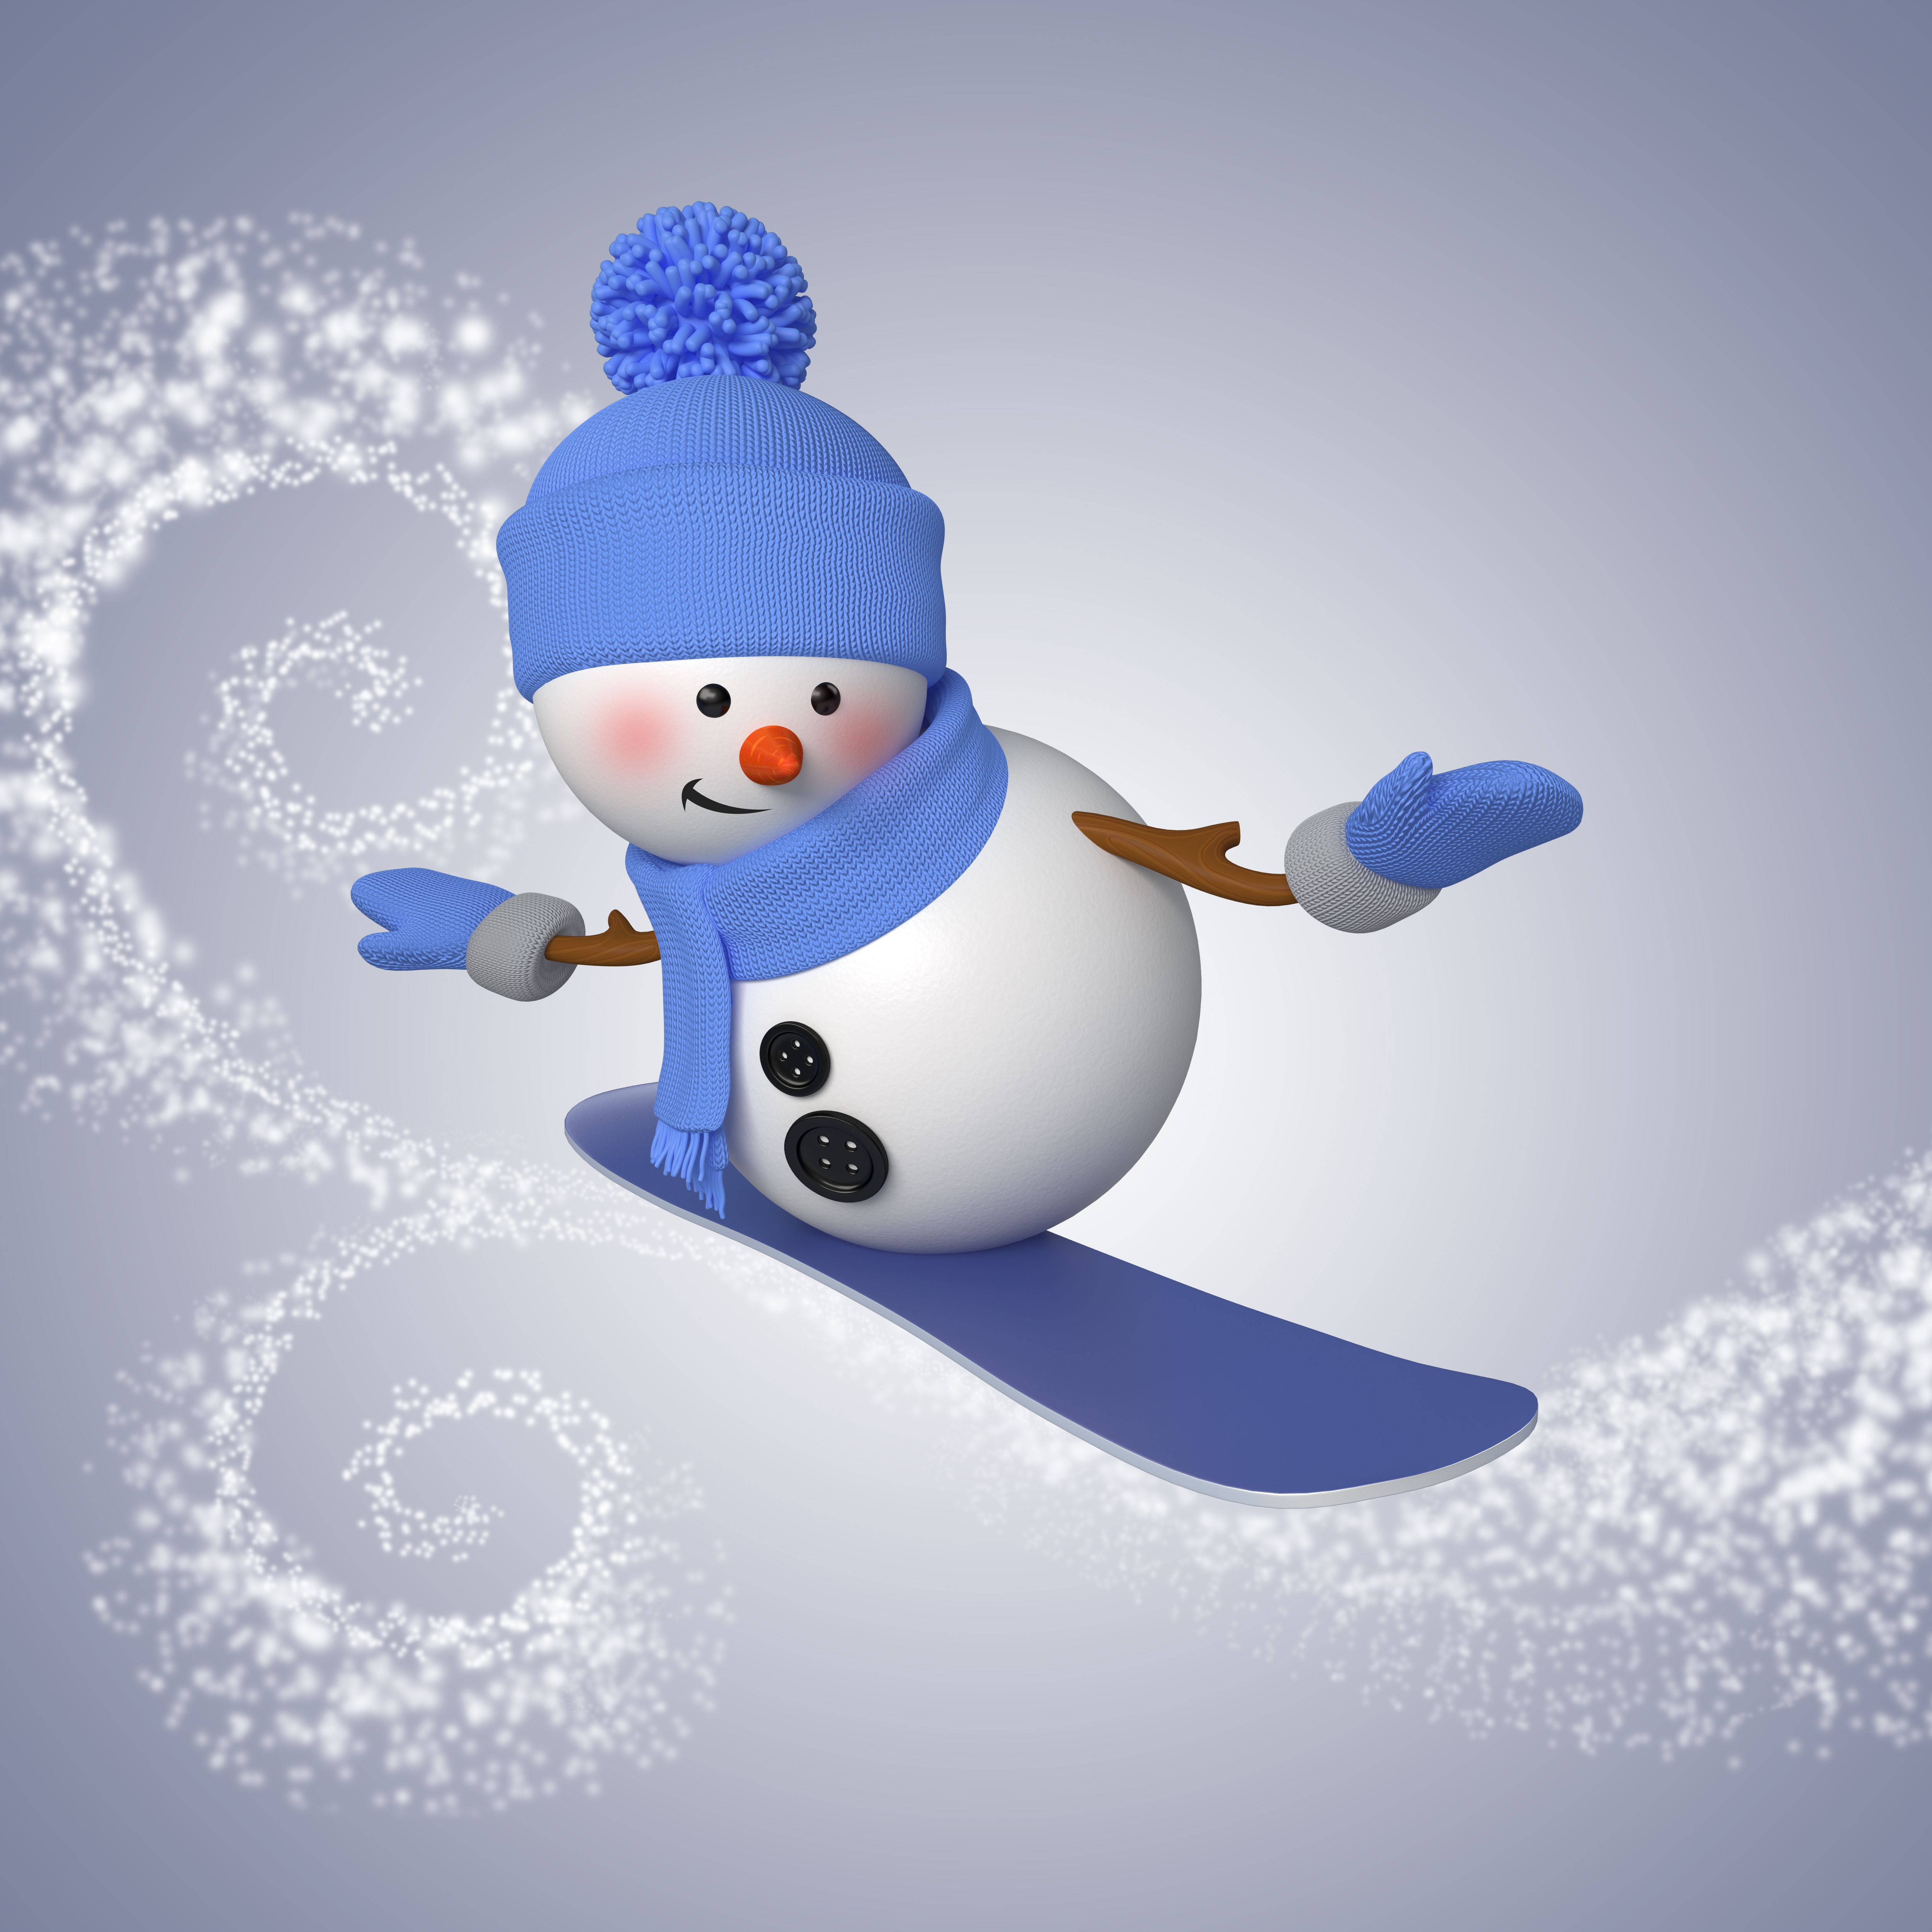 Wallpaper snowman 3d cute christmas new year snowman snowboard 5000x5000